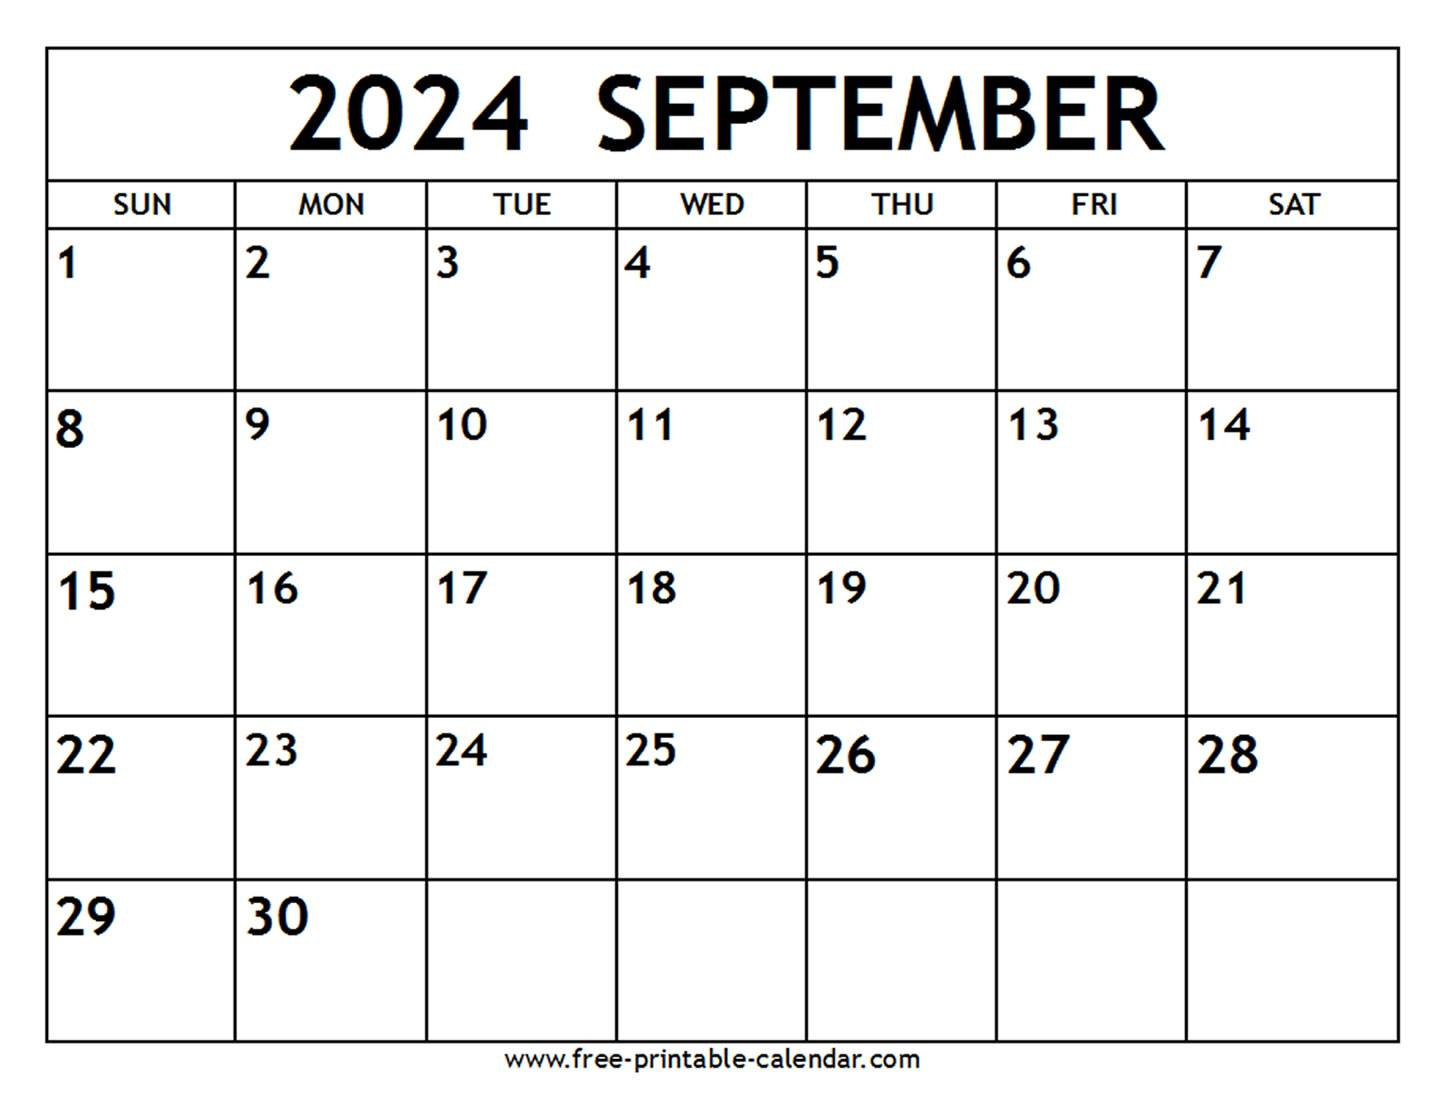 September 2024 Calendar - Free-Printable-Calendar in Free Printable Blank Sept 2024 Calendar